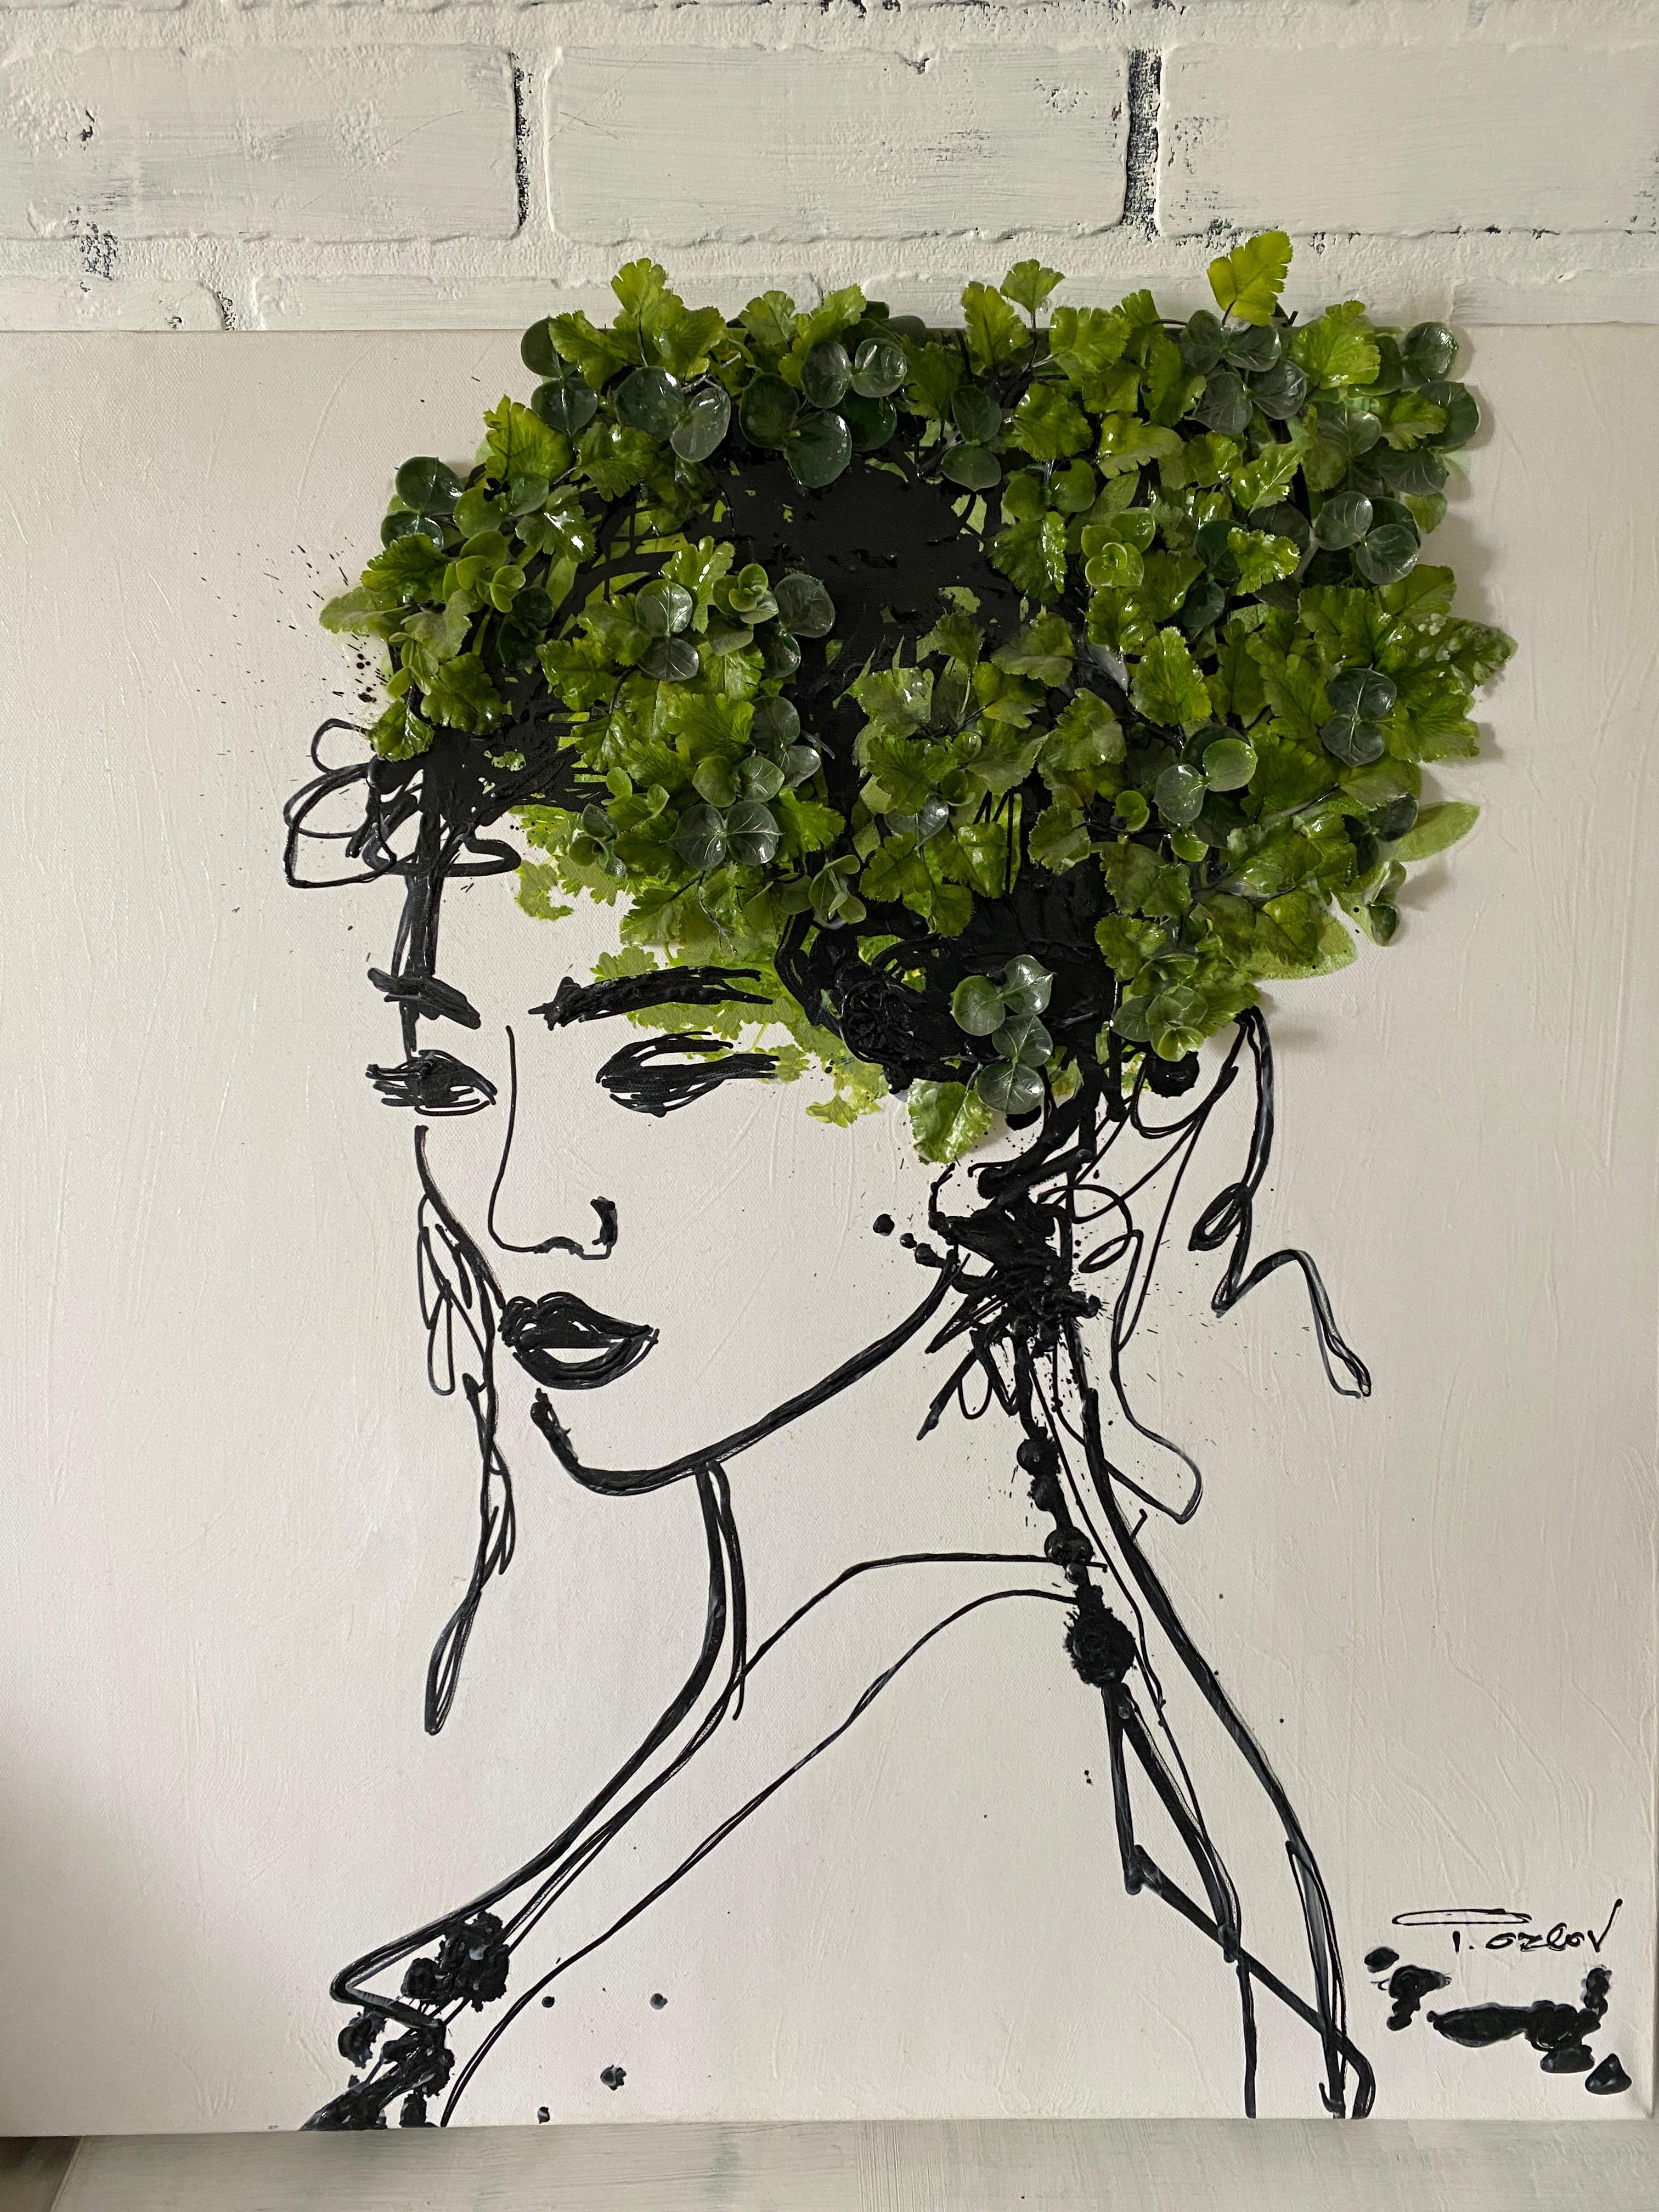 Portrait Spring Woman - Mixed Media on Canvas 3D Design 24x24